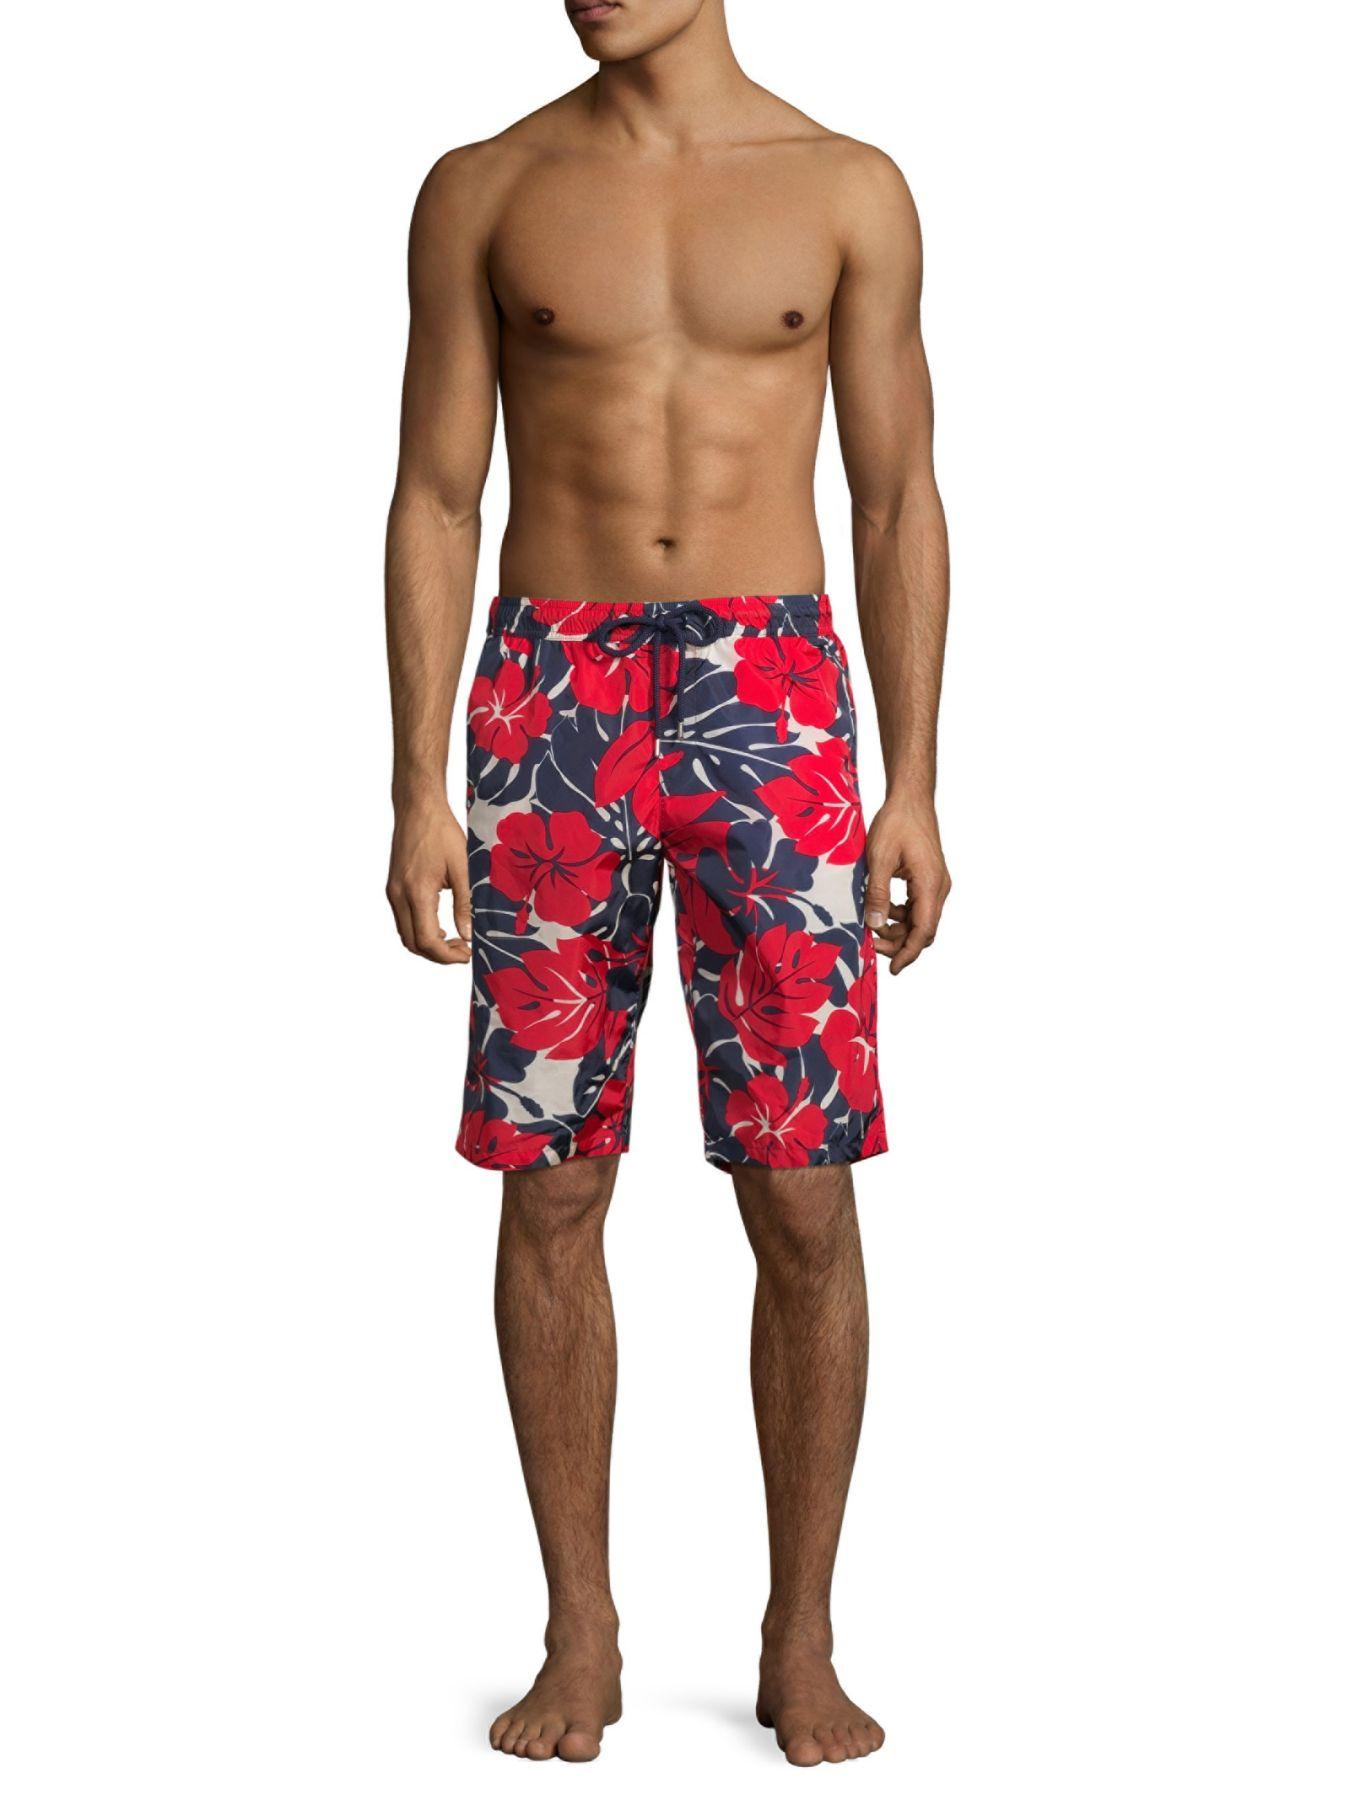 Moncler Synthetic Men's Long Floral Swim Trunks in Red for Men - Lyst